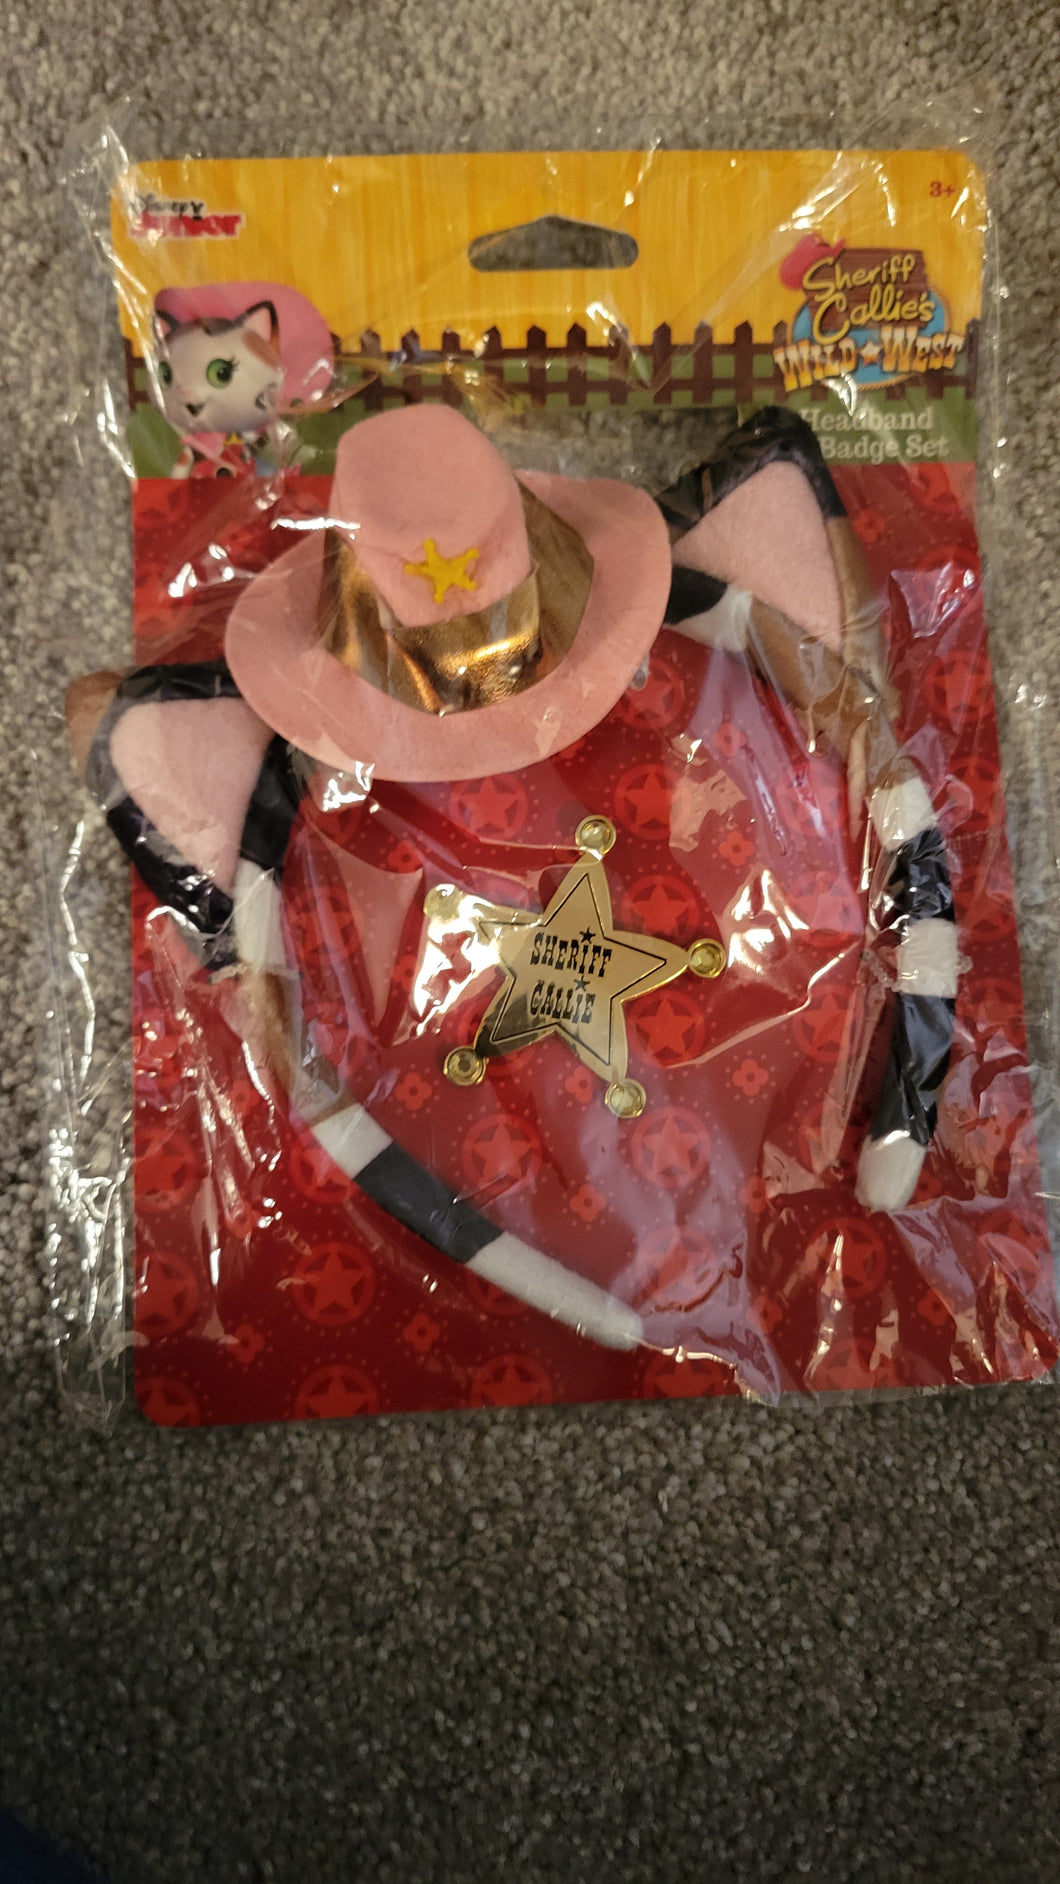 Disney Junior Sheriff Callie's Wild West Headband & Badge Set